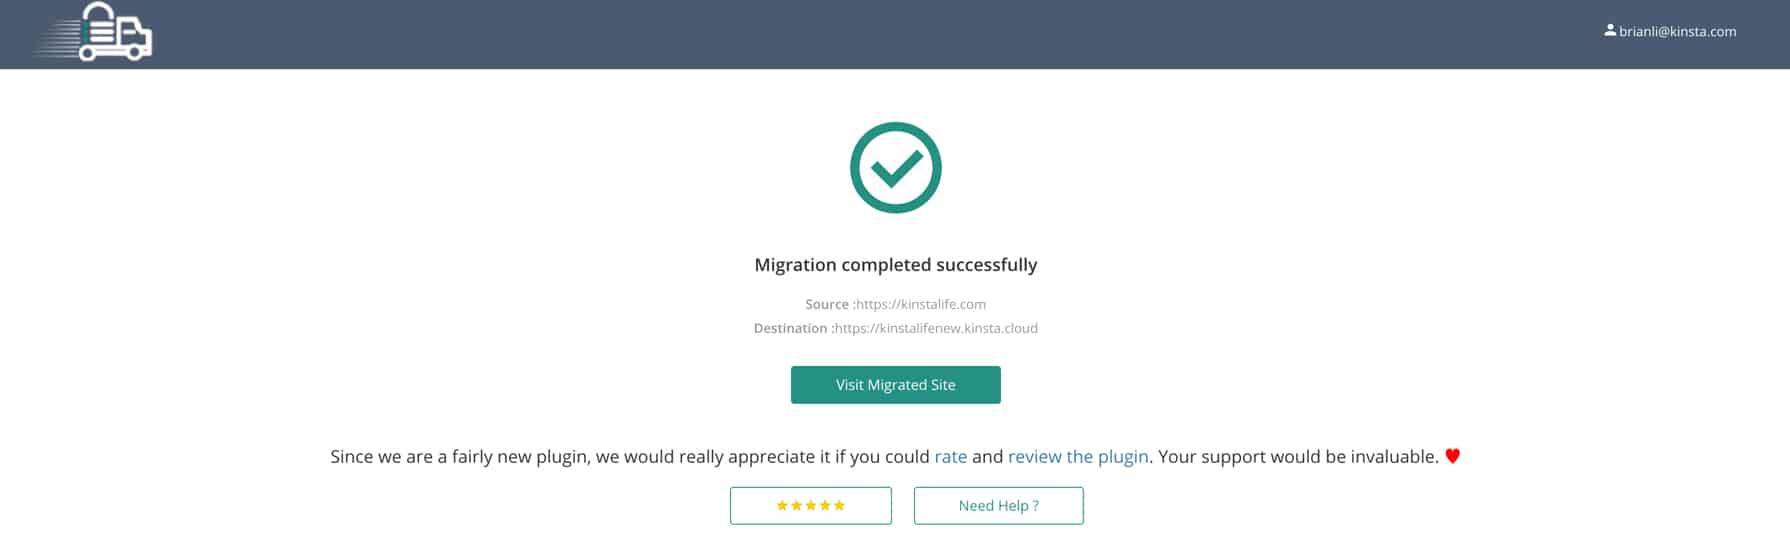 Une migration WordPress réussie avec Migrate Guru.